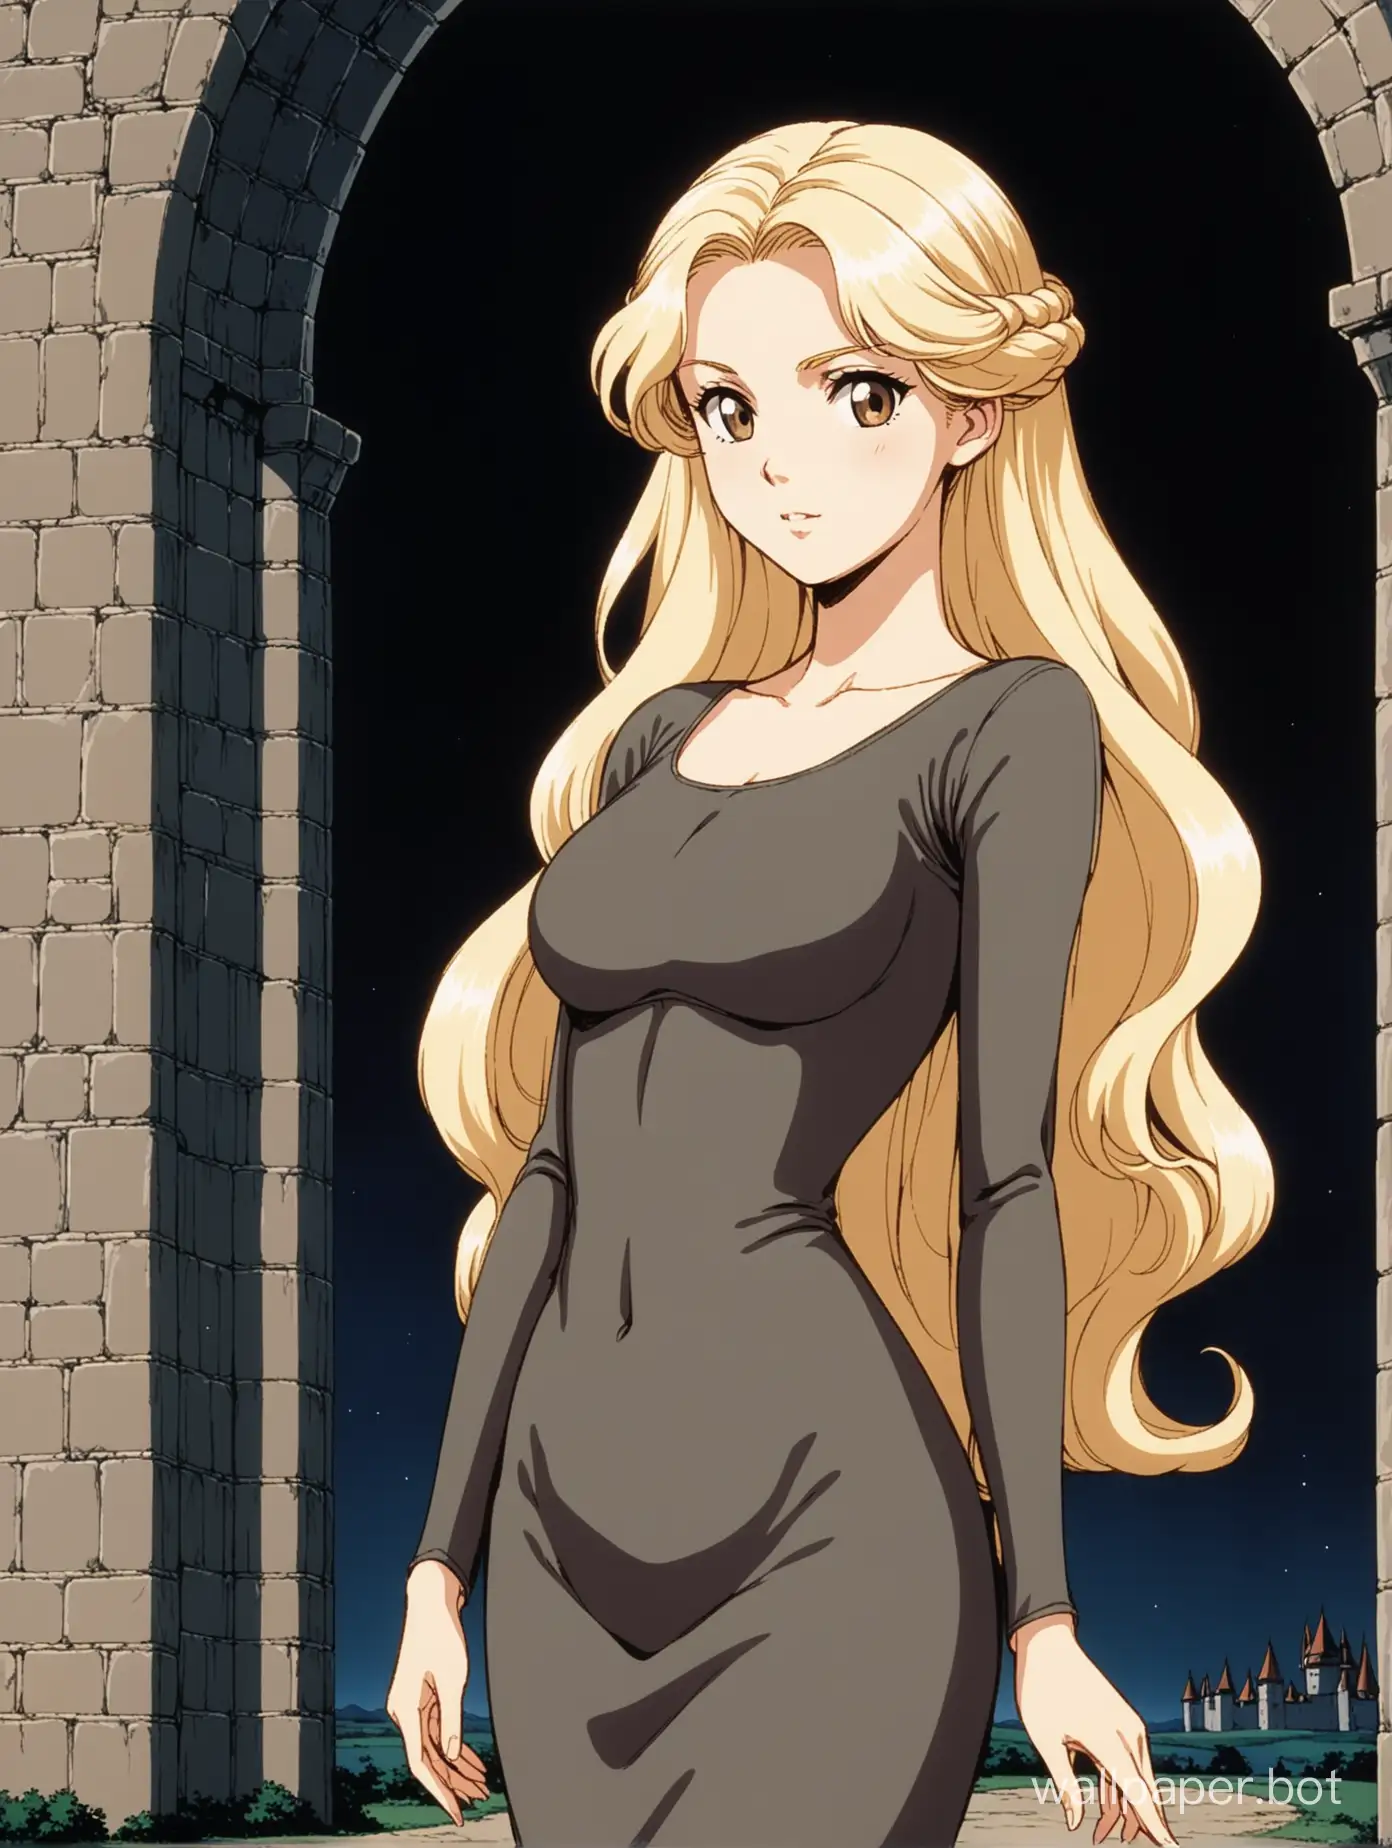 Medieval-Elegance-Elegant-WhiteBlonde-Woman-in-Retro-Anime-Style